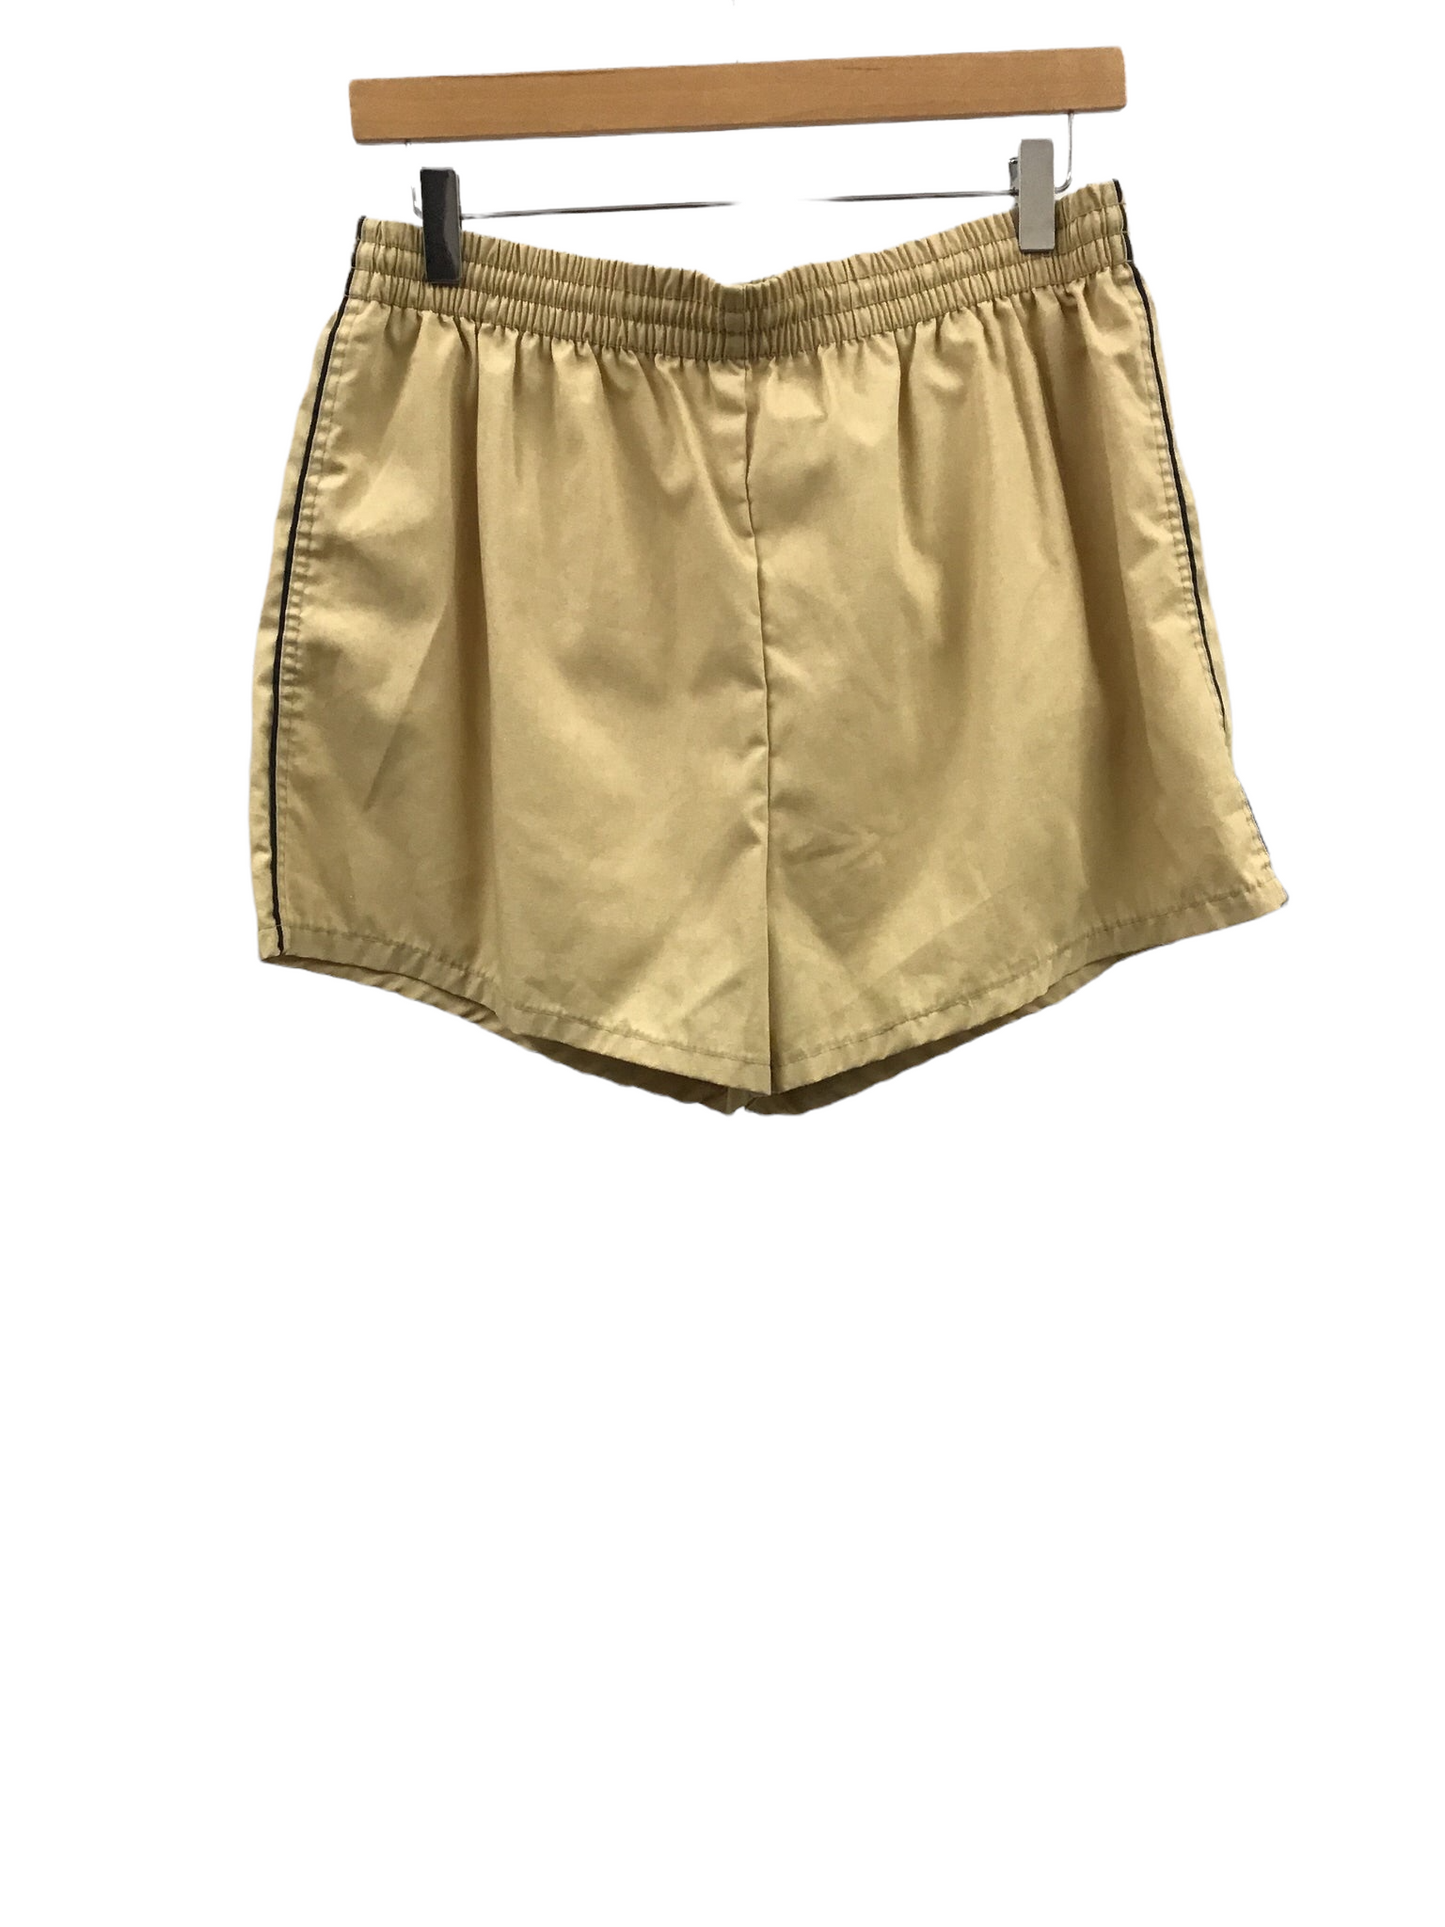 Sandbridge Beach Shorts (Size L)